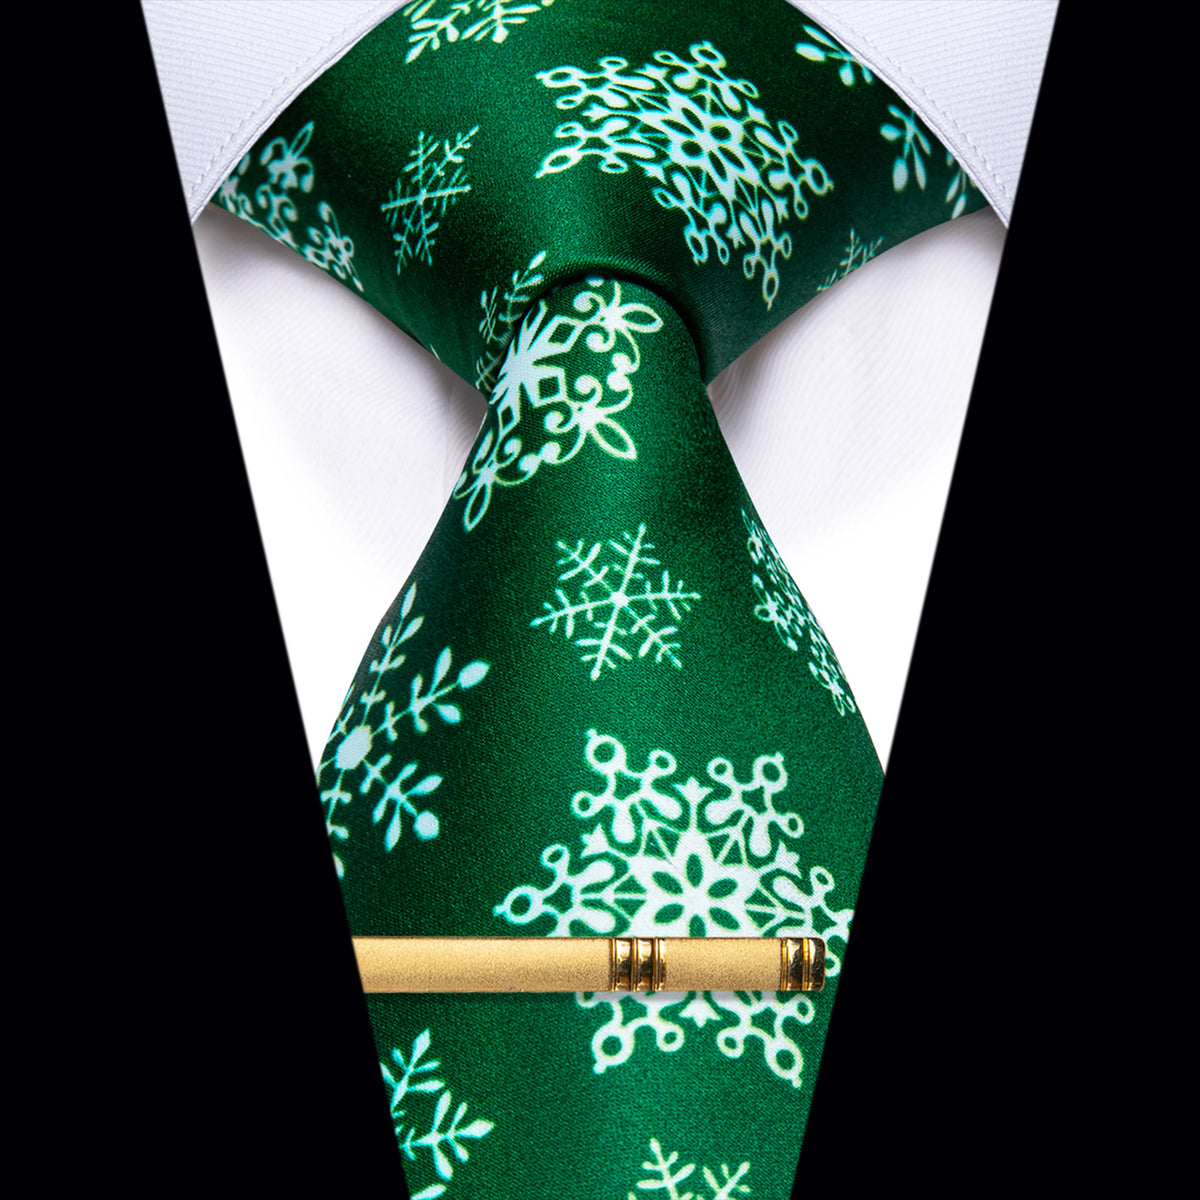 Green White Snowflake Christmas Silk Necktie with Golden Tie Clip